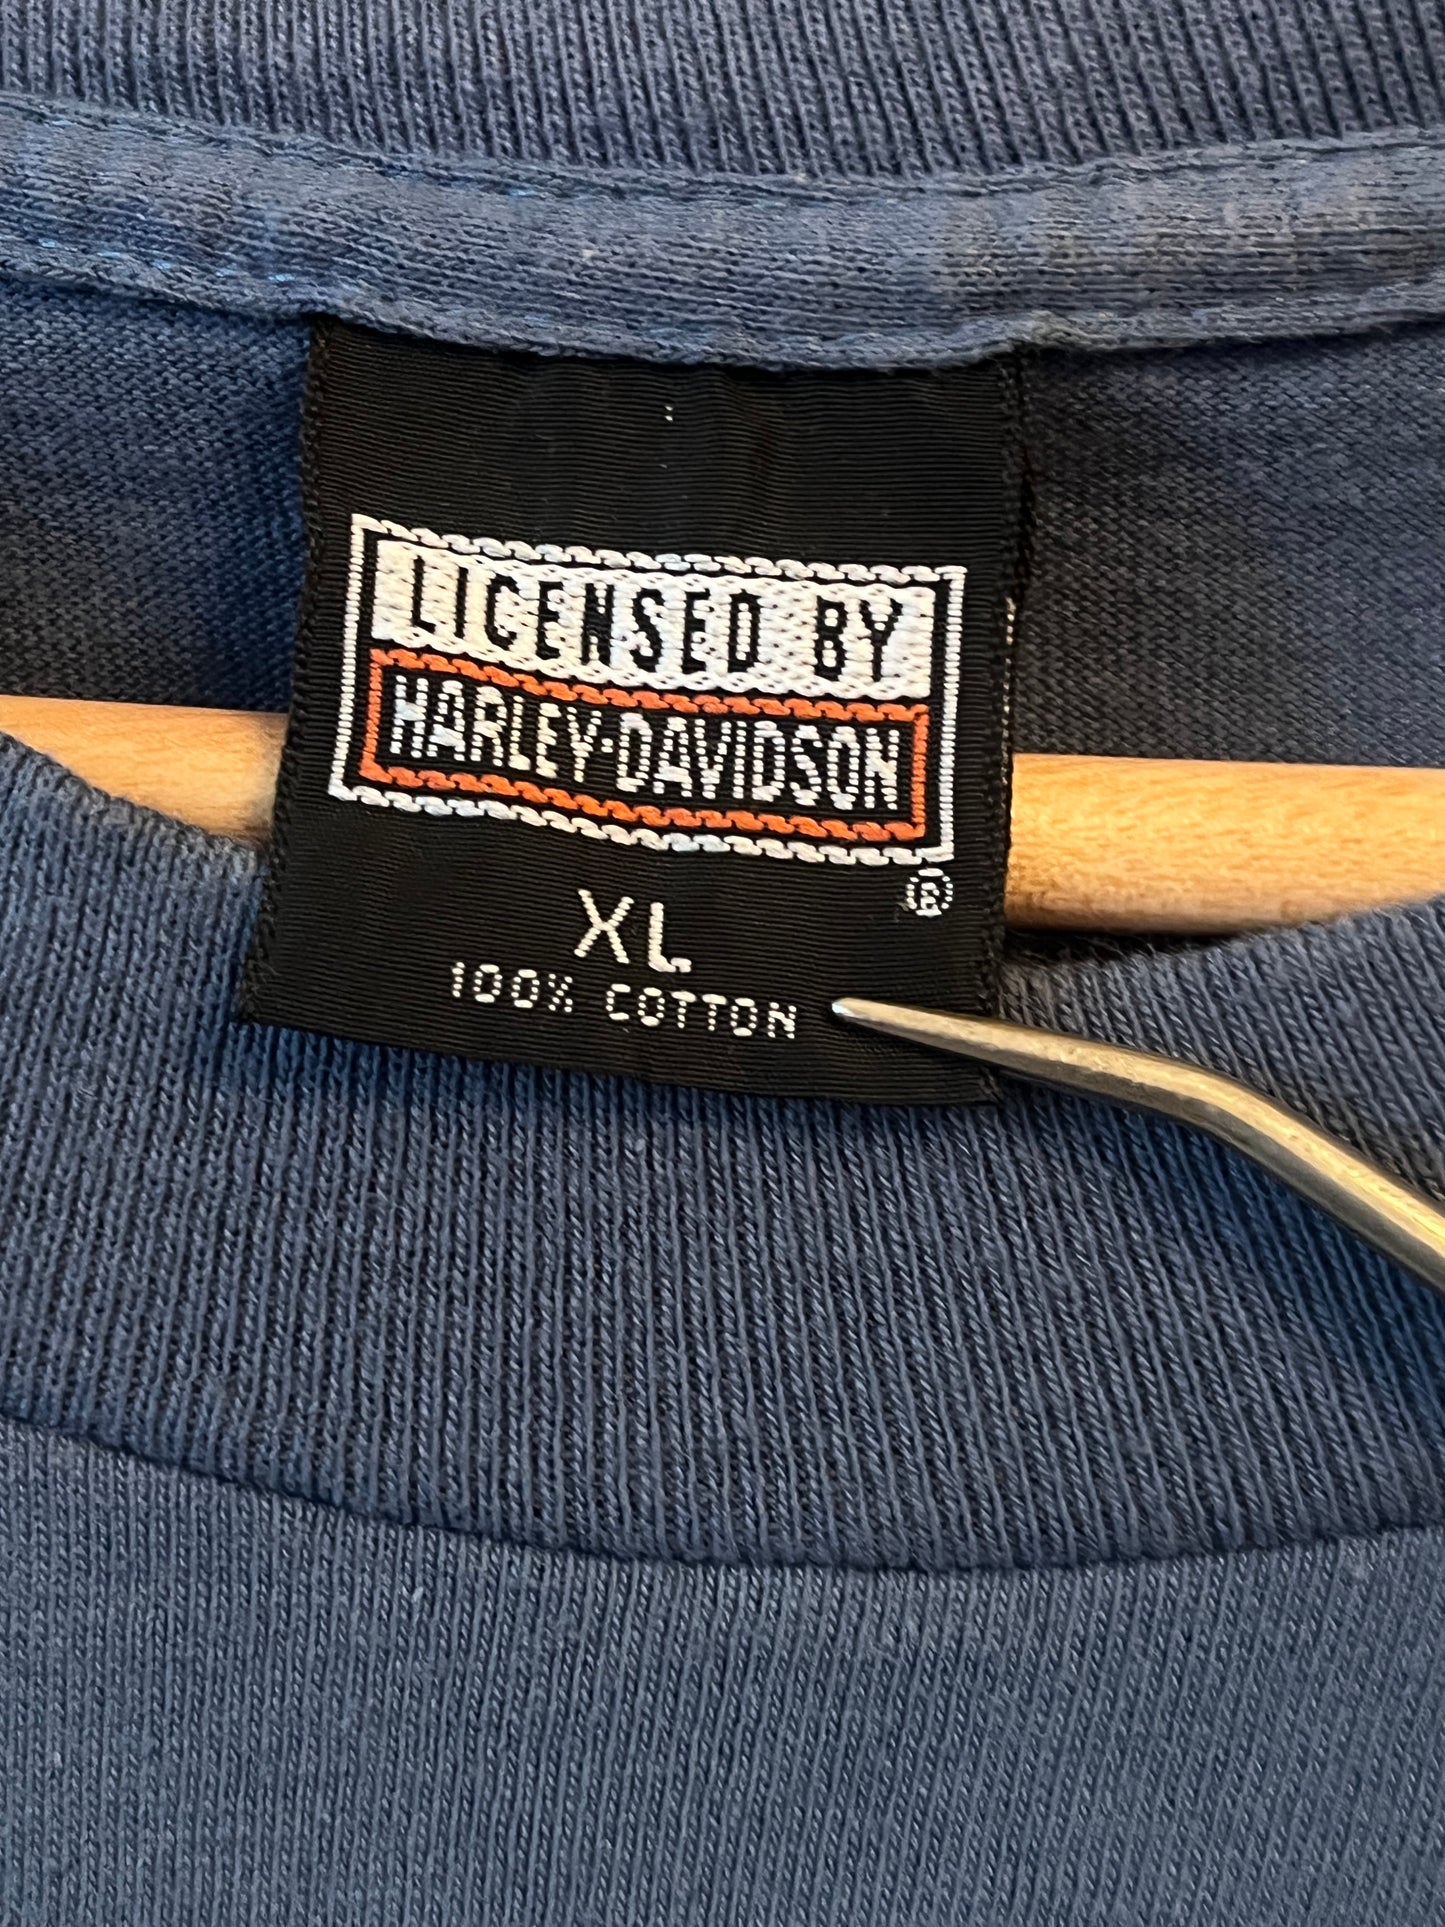 Harley Davidson Gear graphic '95